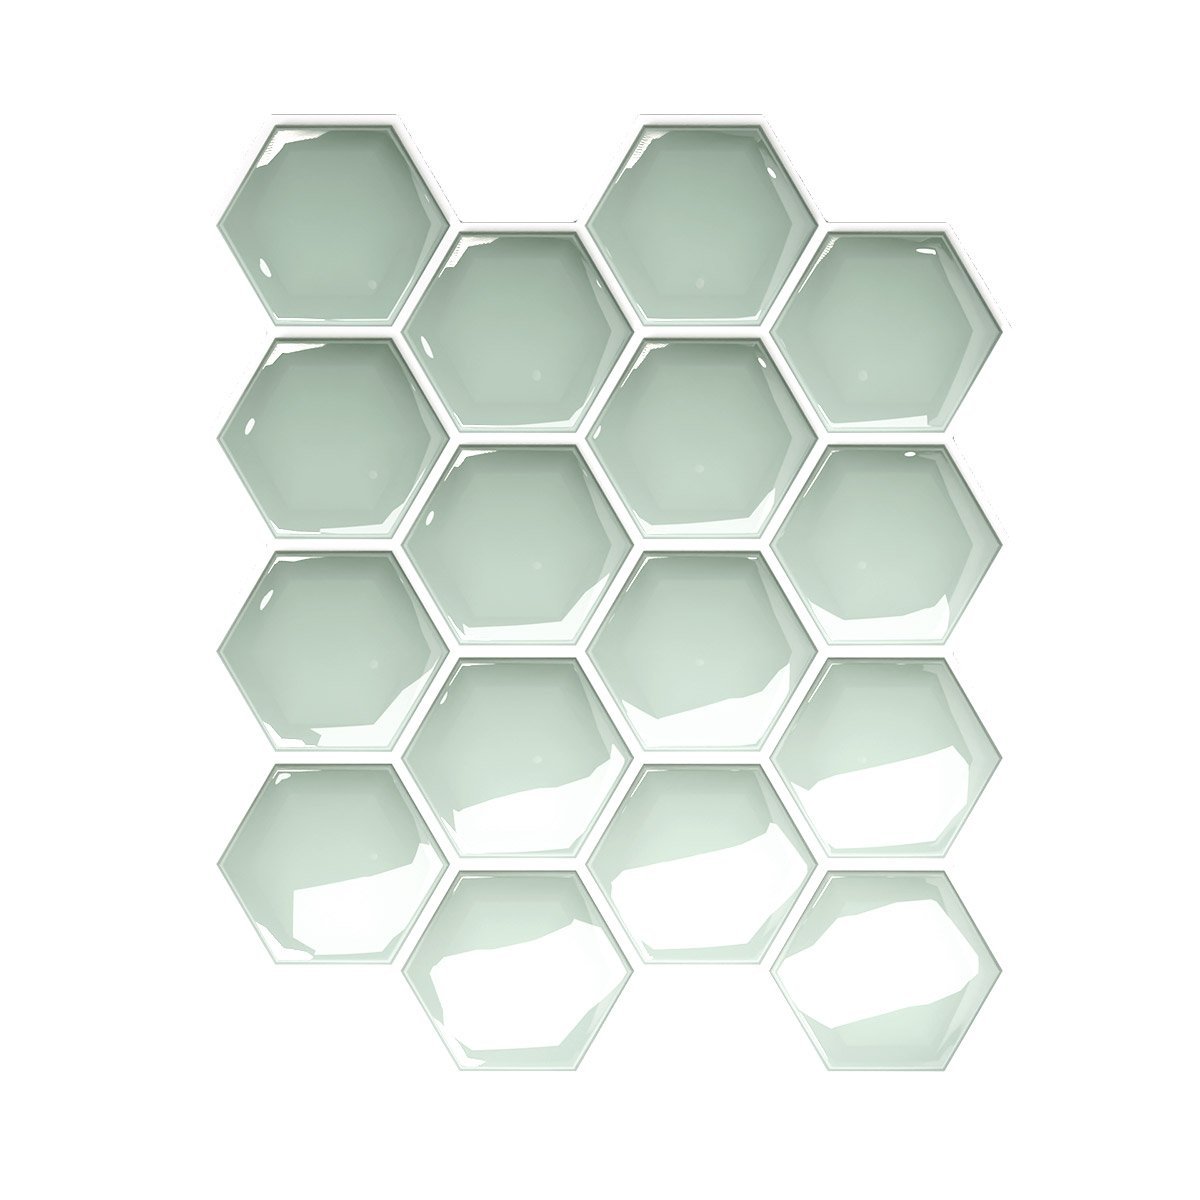 Pastilha Adesiva Hexagonal Verde Frosty com Rejunte Branco Lavável Banheiro Cozinha Sala - 1